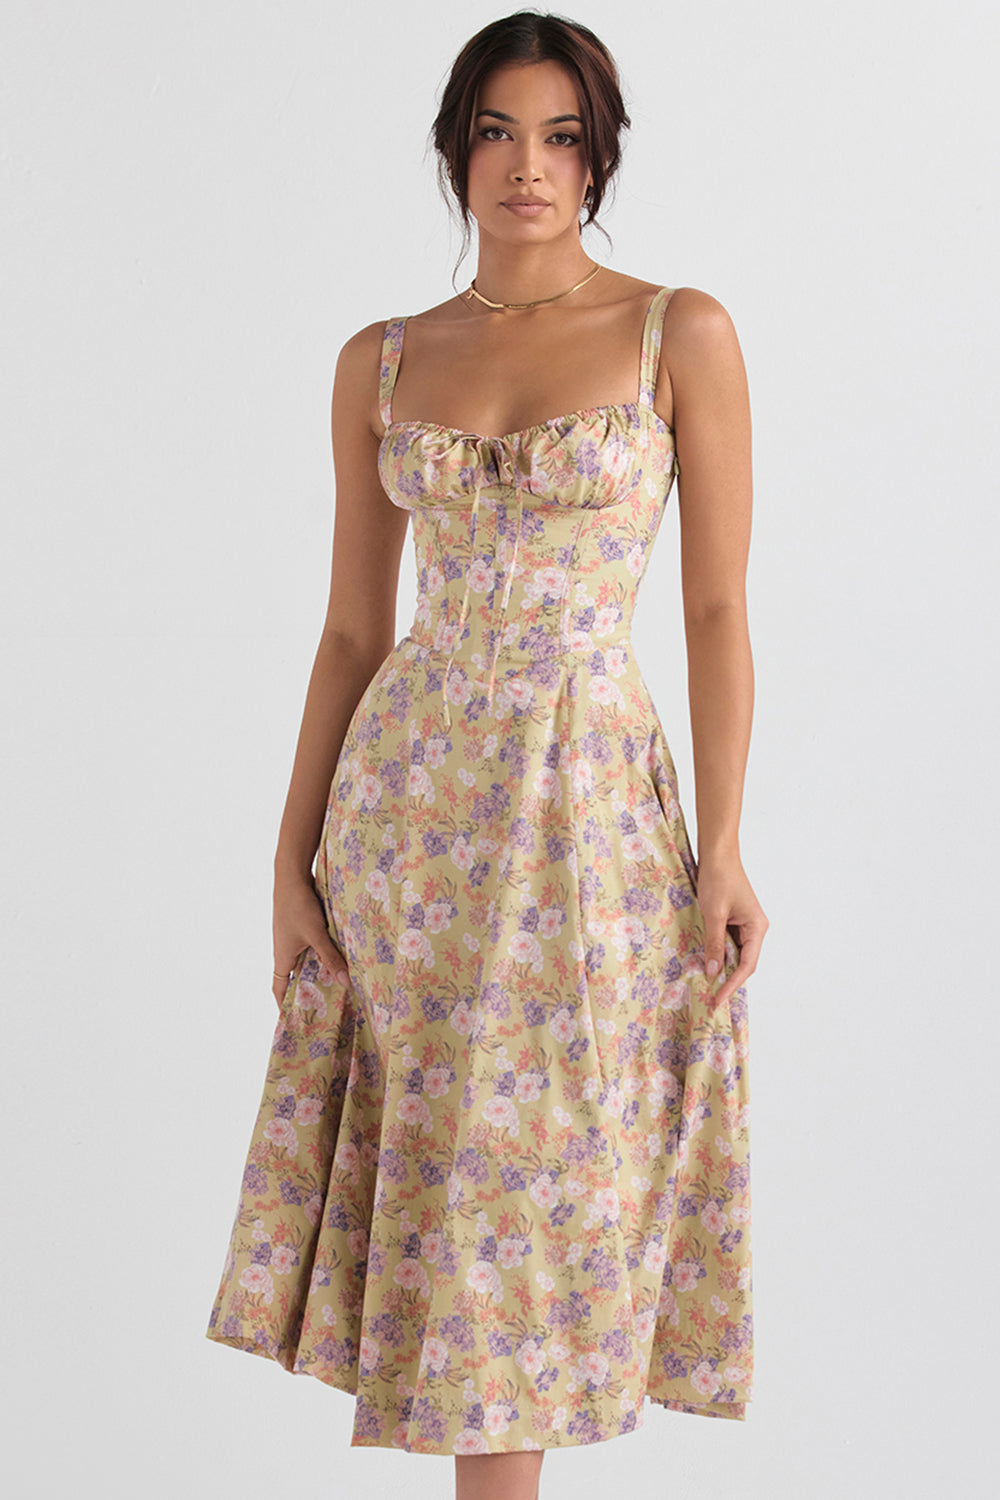 floral print bustier dress